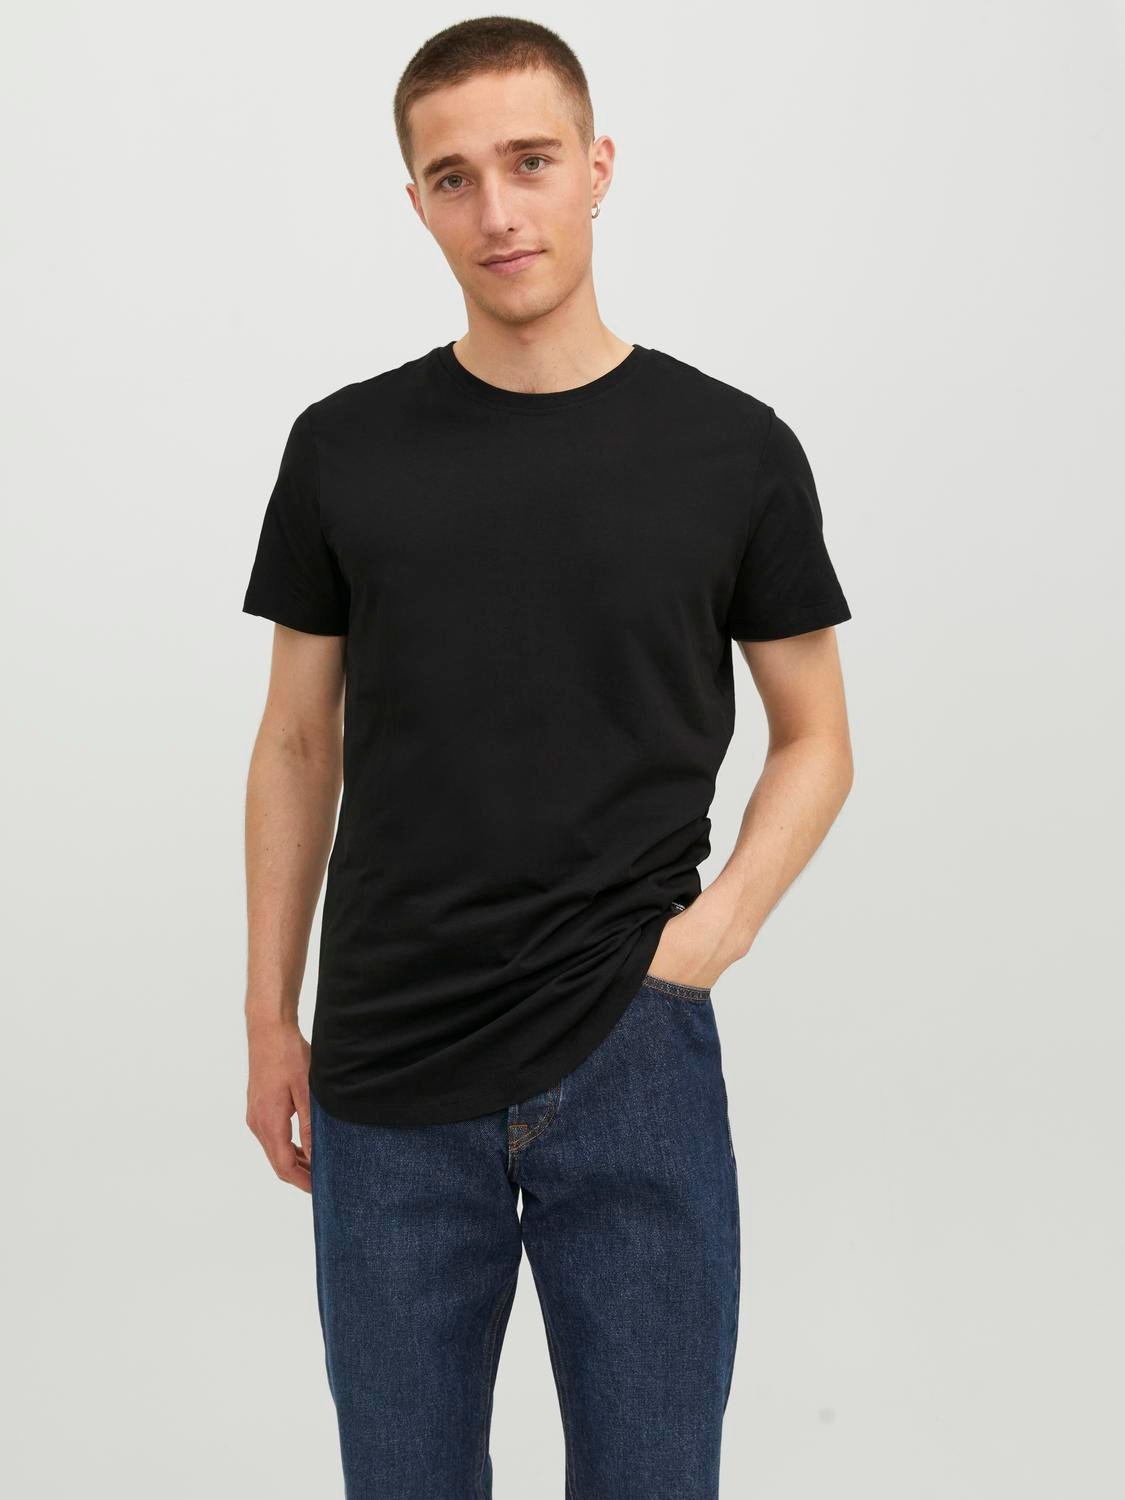 Jack & Jones T-shirt Liso Decote Redondo -Black - 12113648